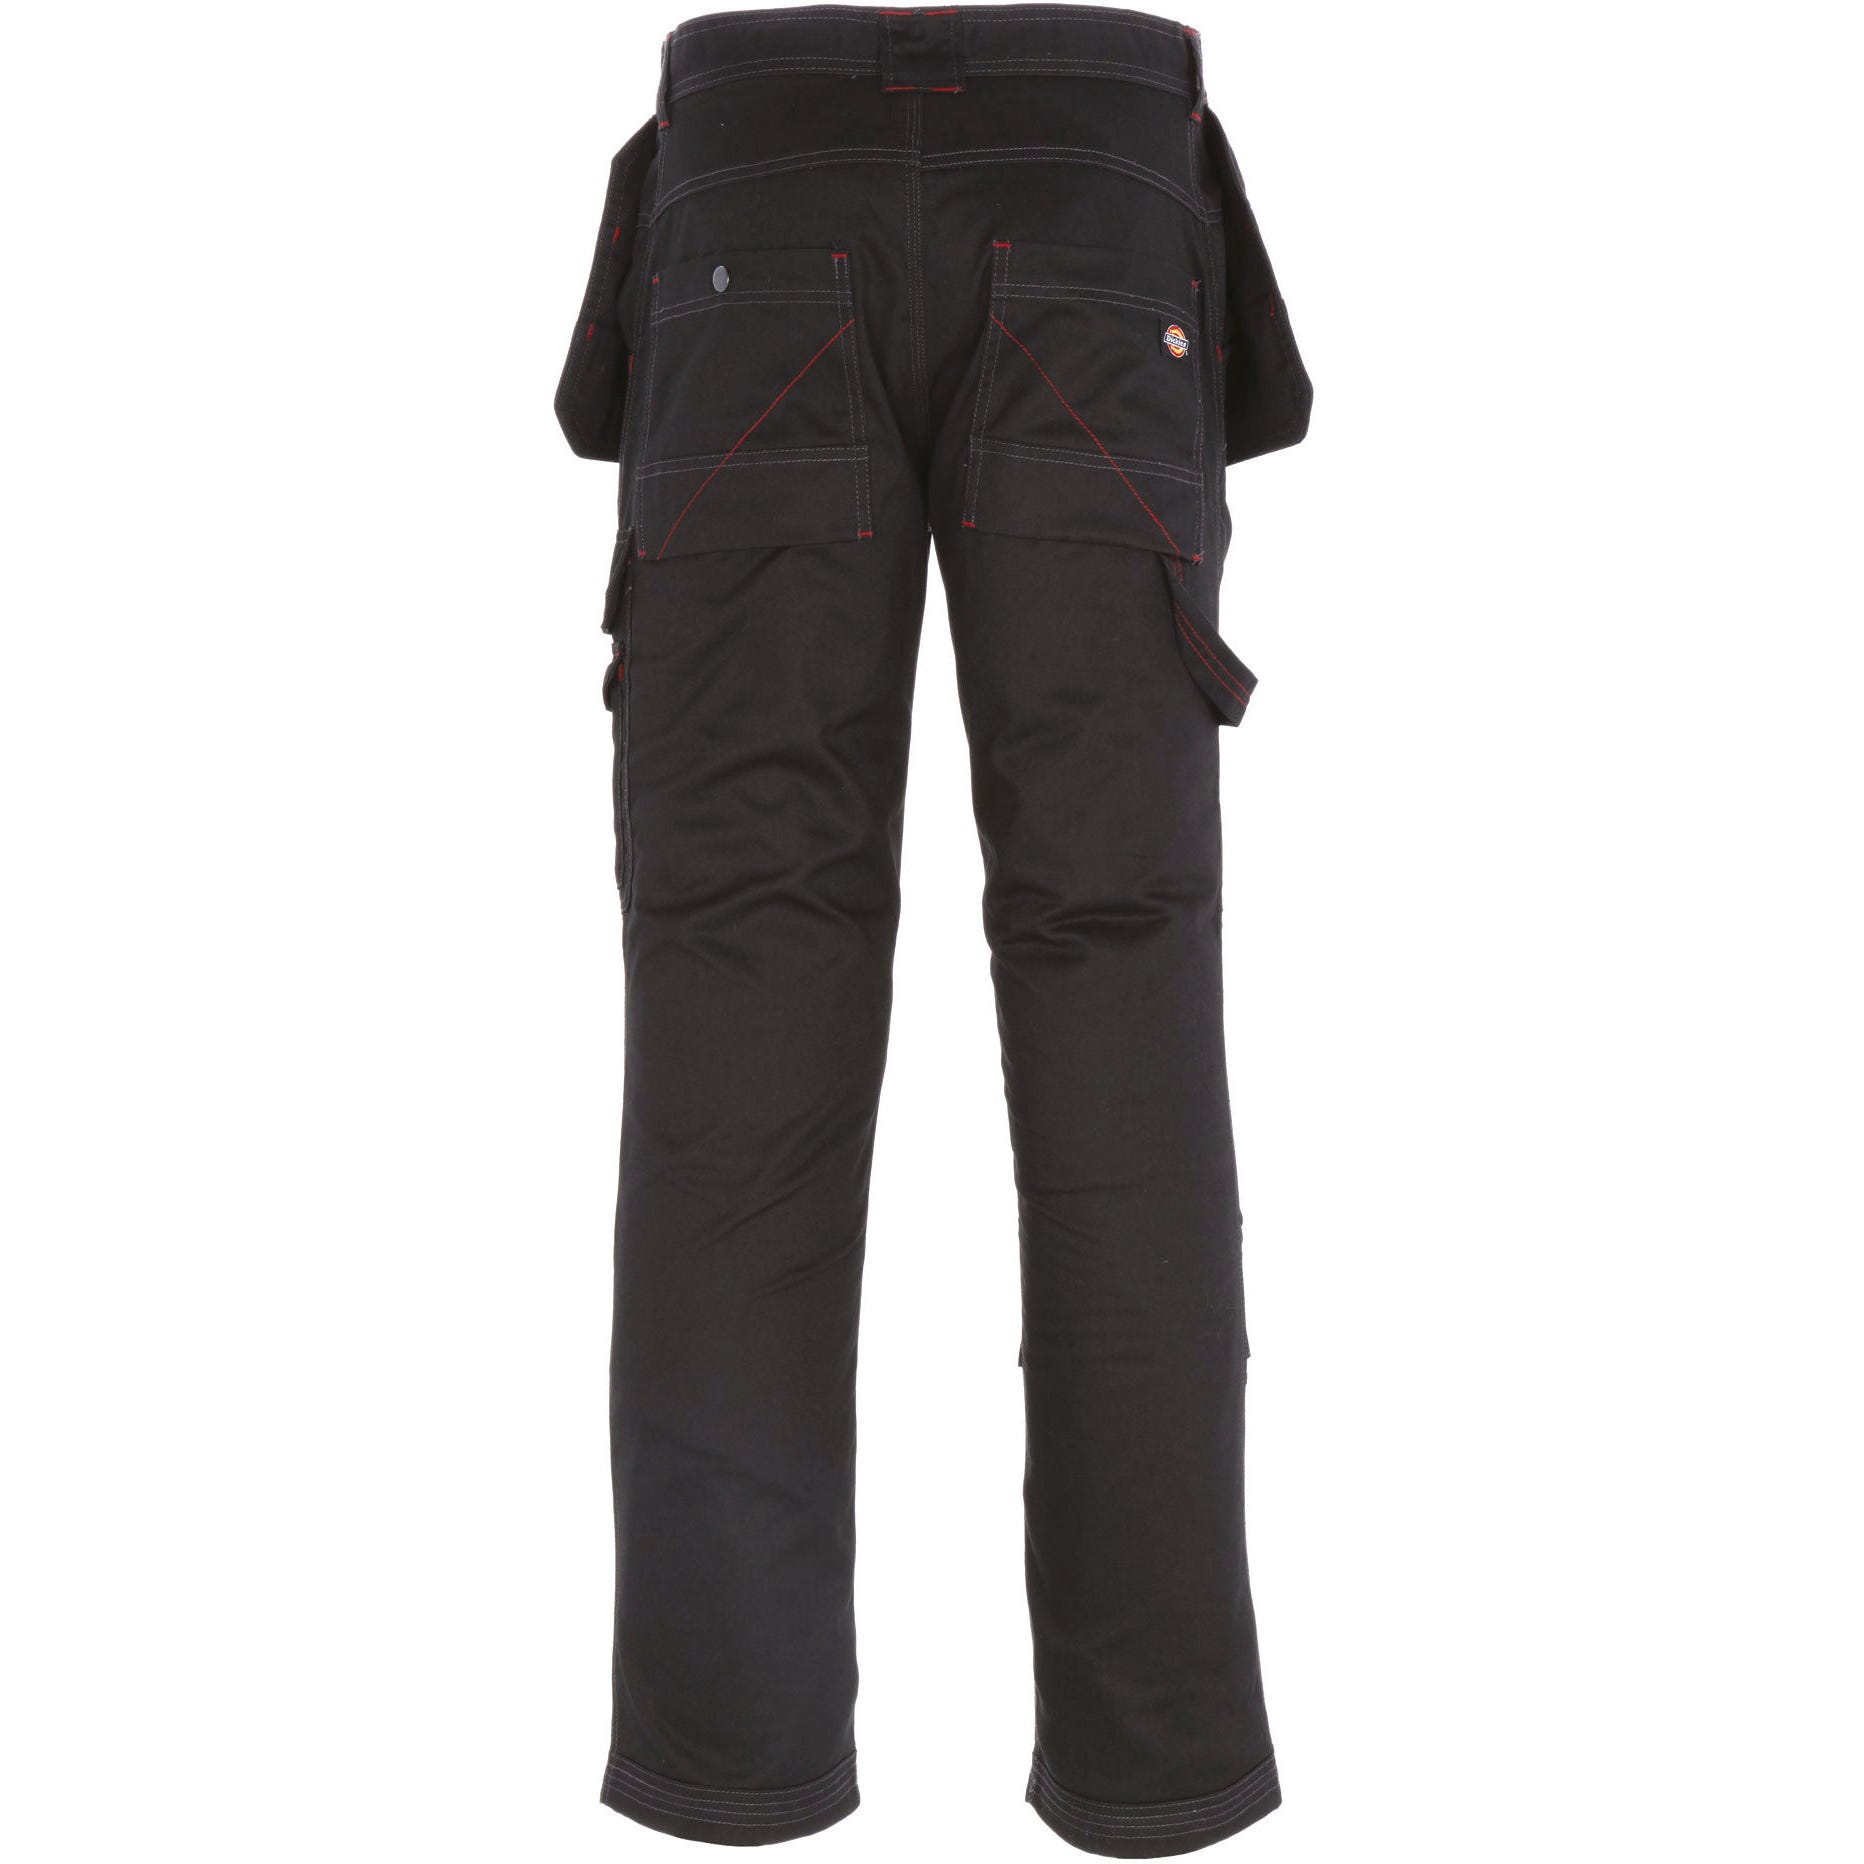 Pantalon Redhawk Pro Noir - Dickies - Taille 42 5